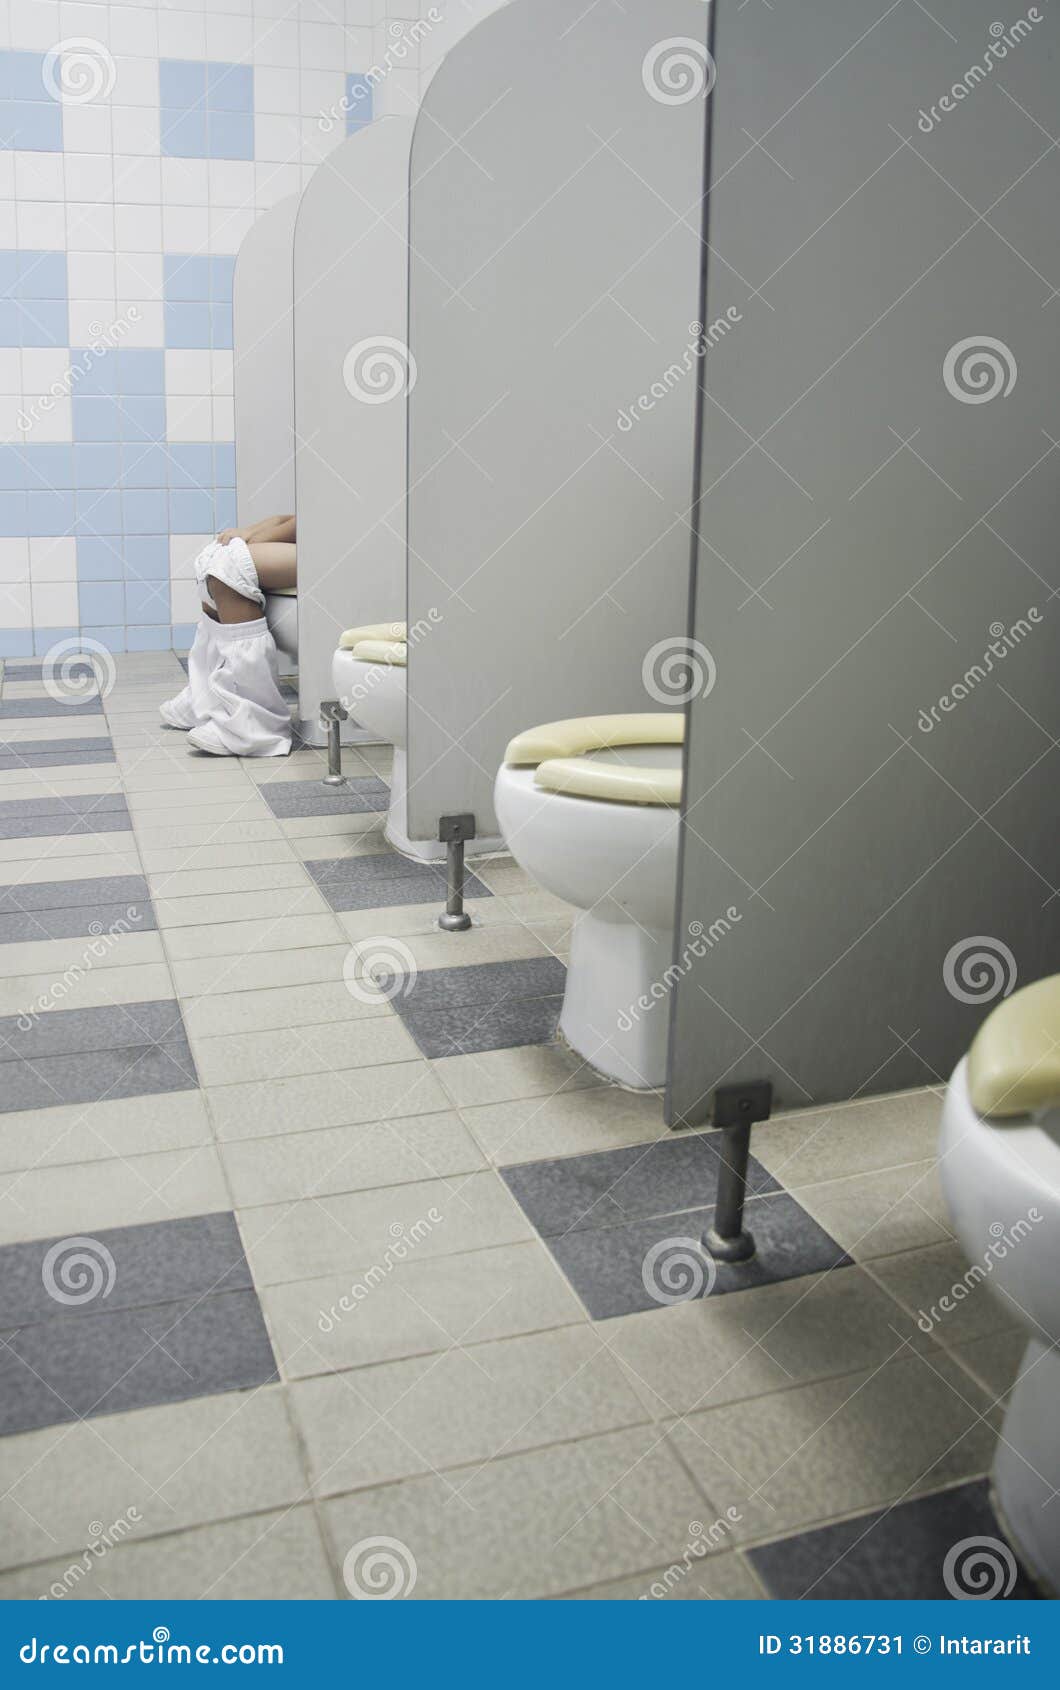 Boys Toilet Seat. Stock Image Image 31886731